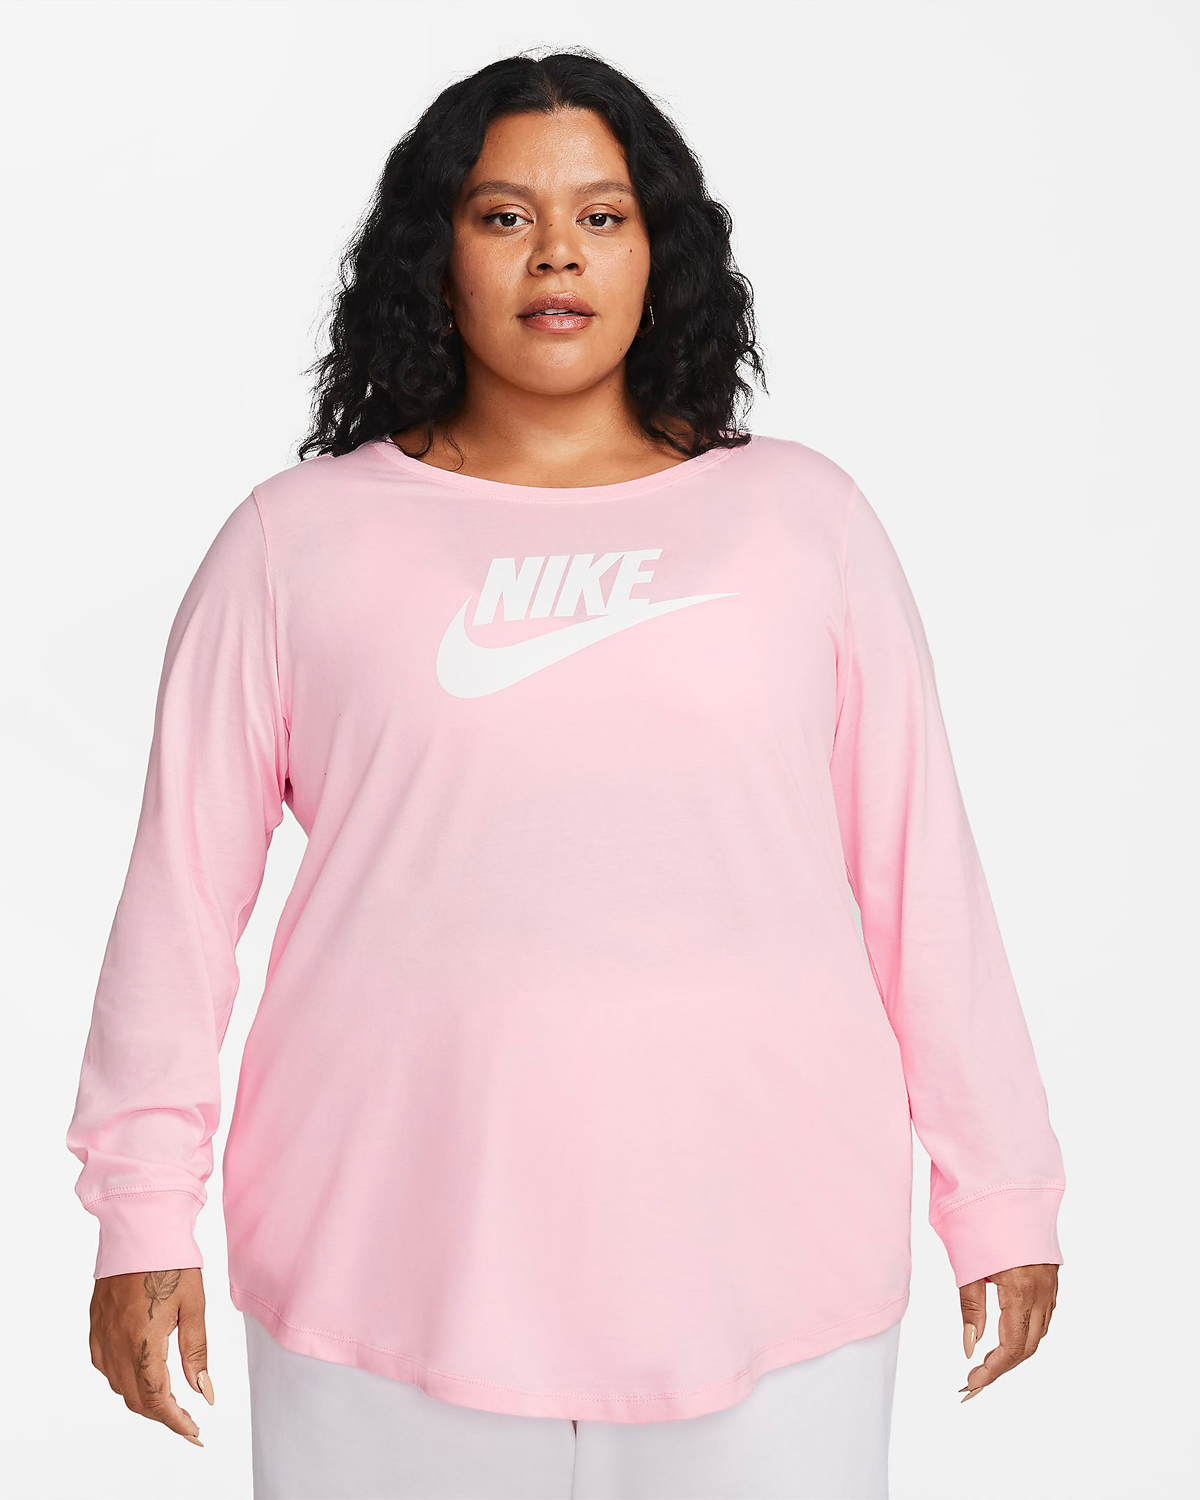 Nike-Sportswear-Long-Sleeve-Logo-Plus-Size-Shirt-Medium-Soft-Pink